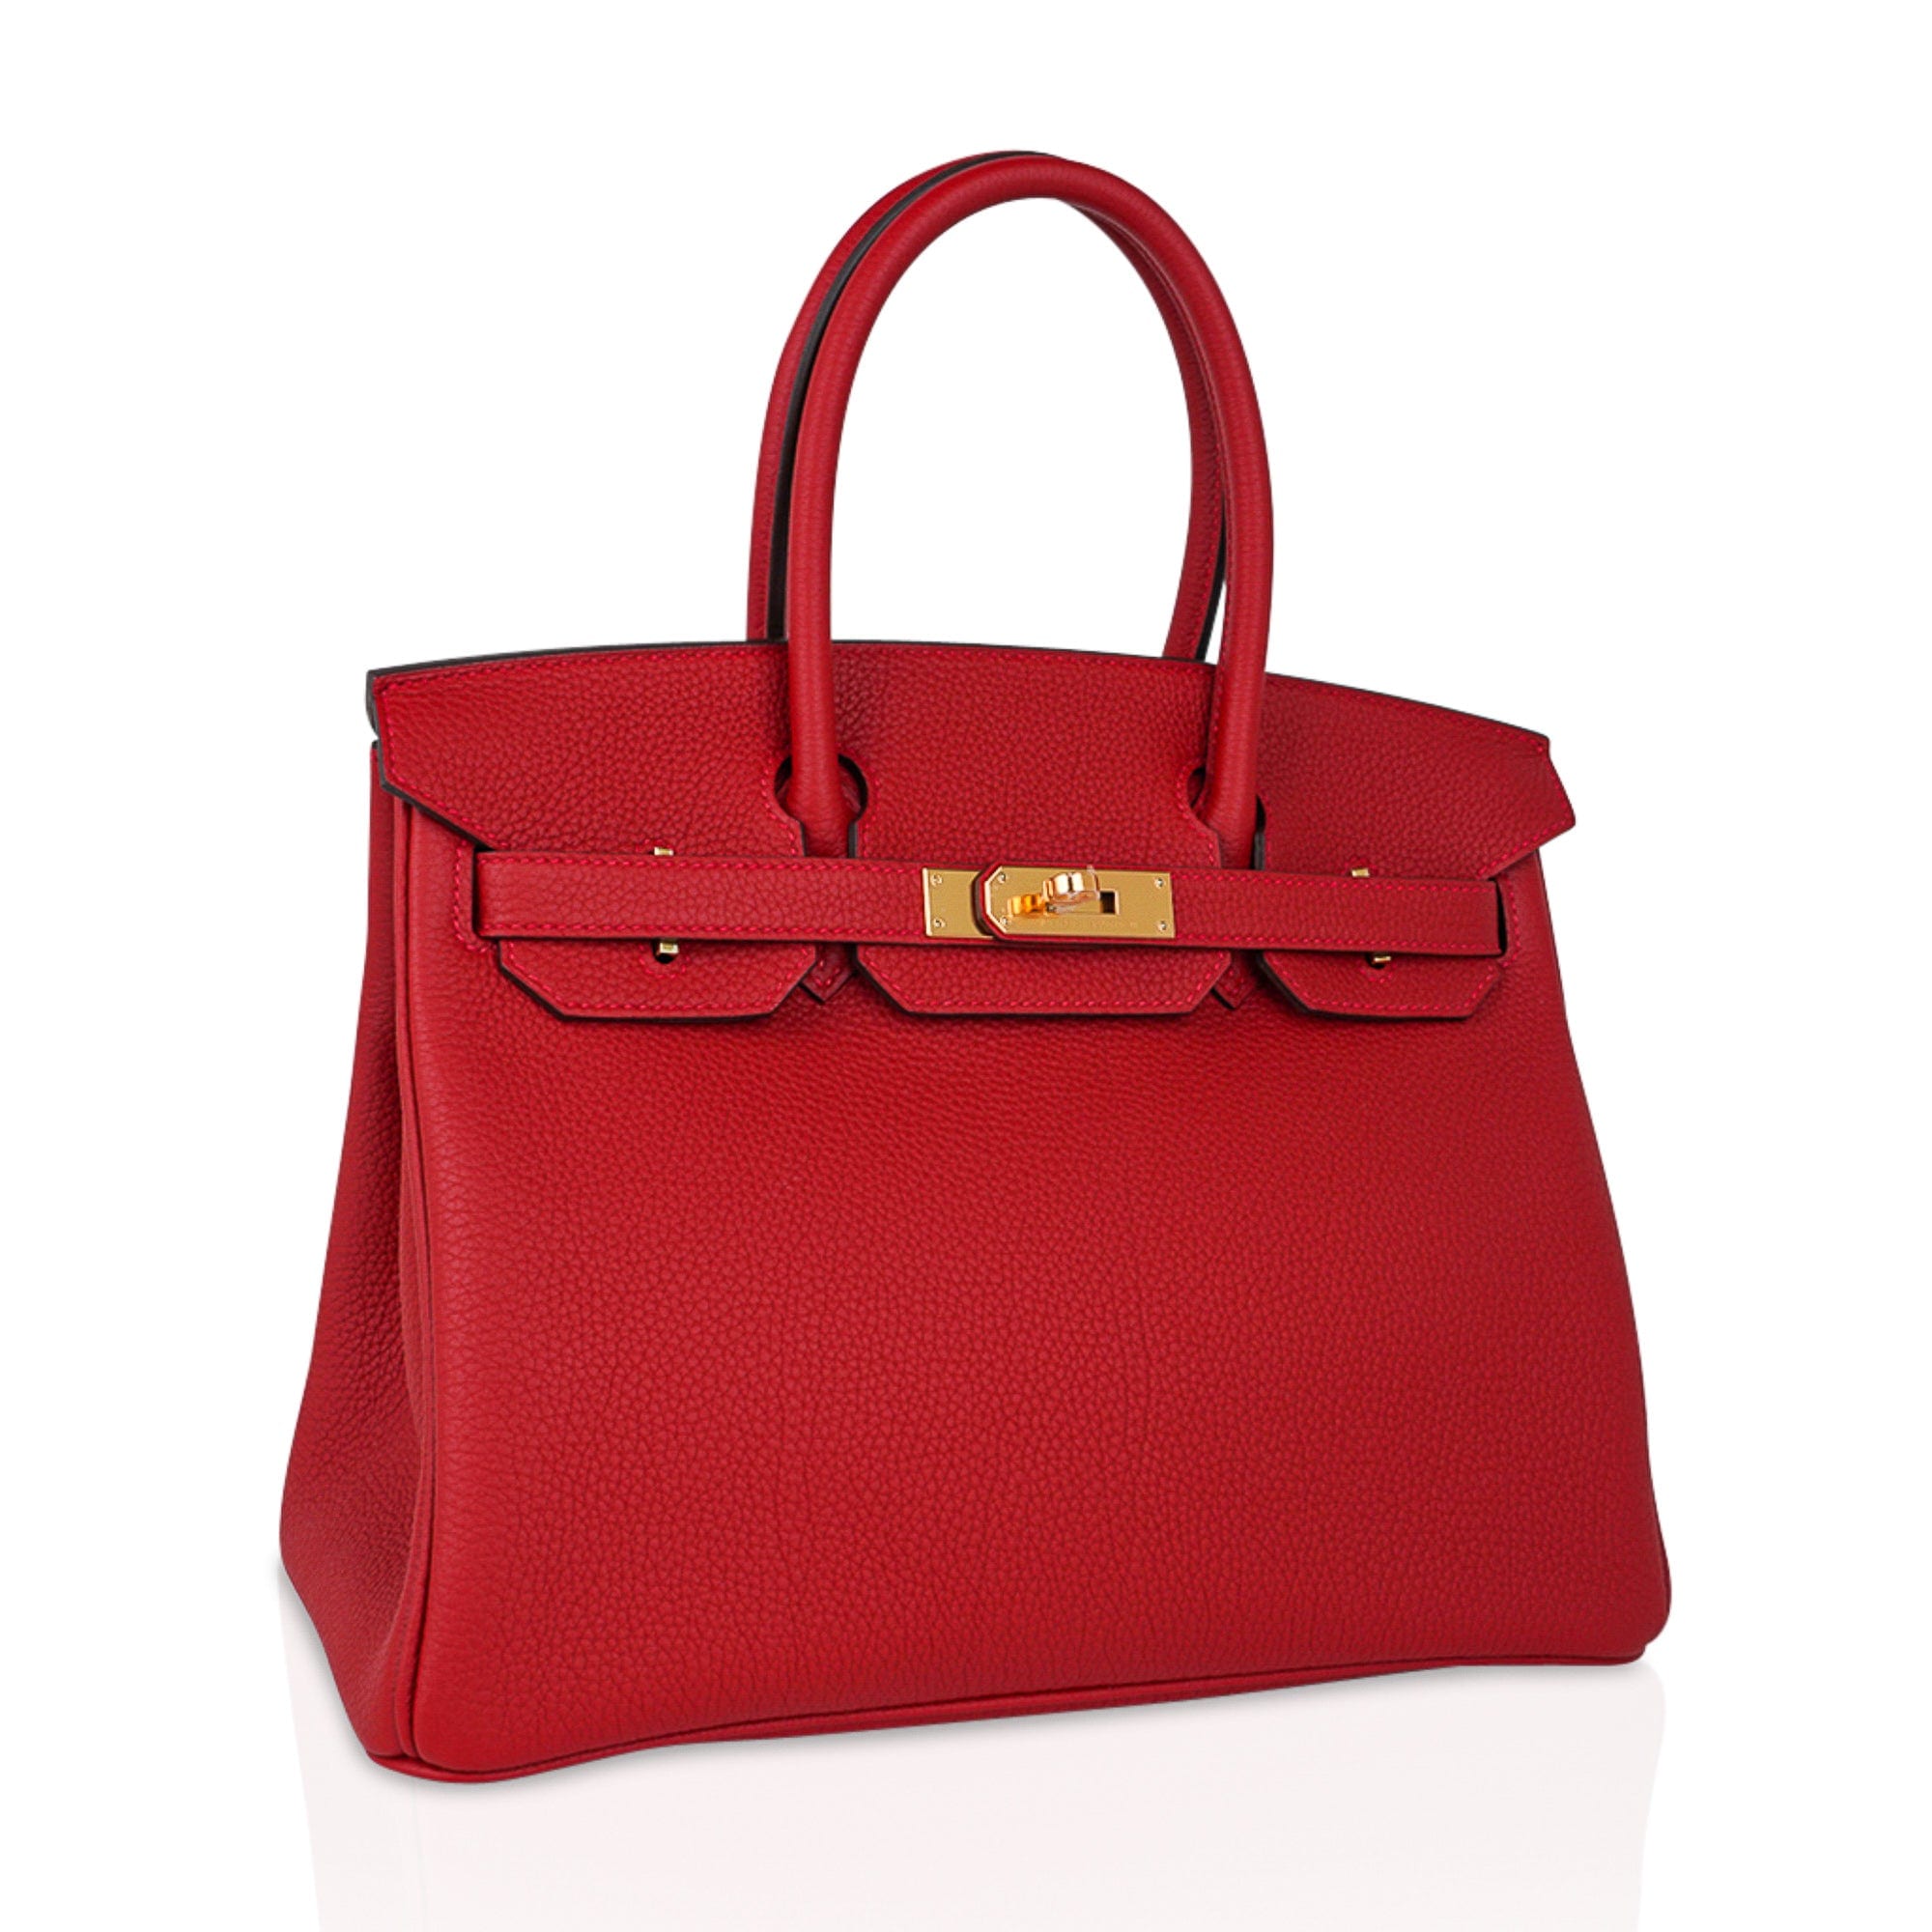 Hermes Birkin 30 Bag Lipstick Red Rouge Vif Togo Leather with Gold Hardware